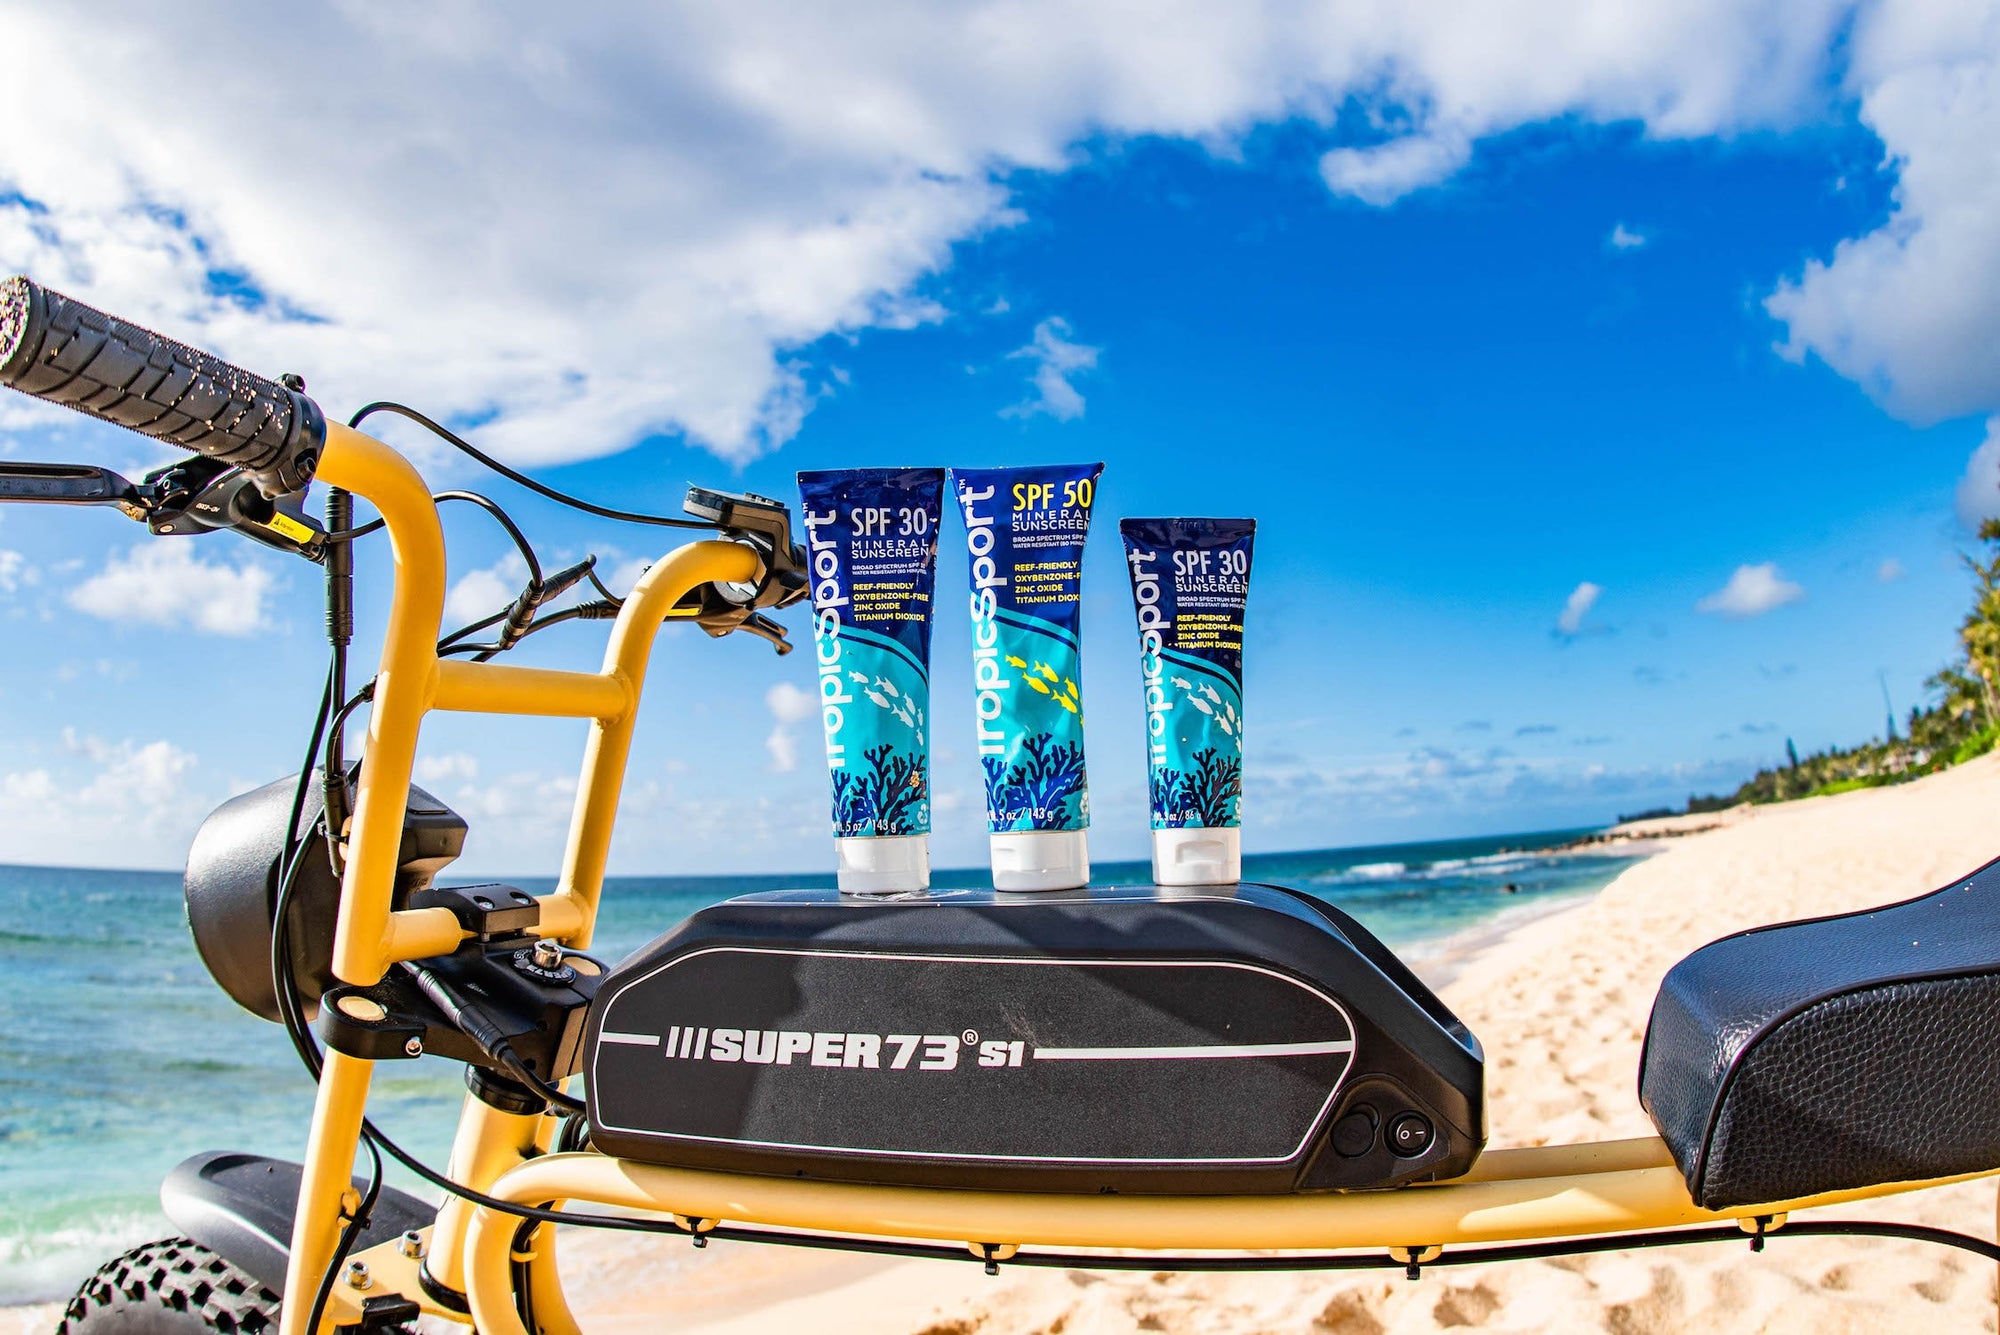 TropicSport natural sunscreen products